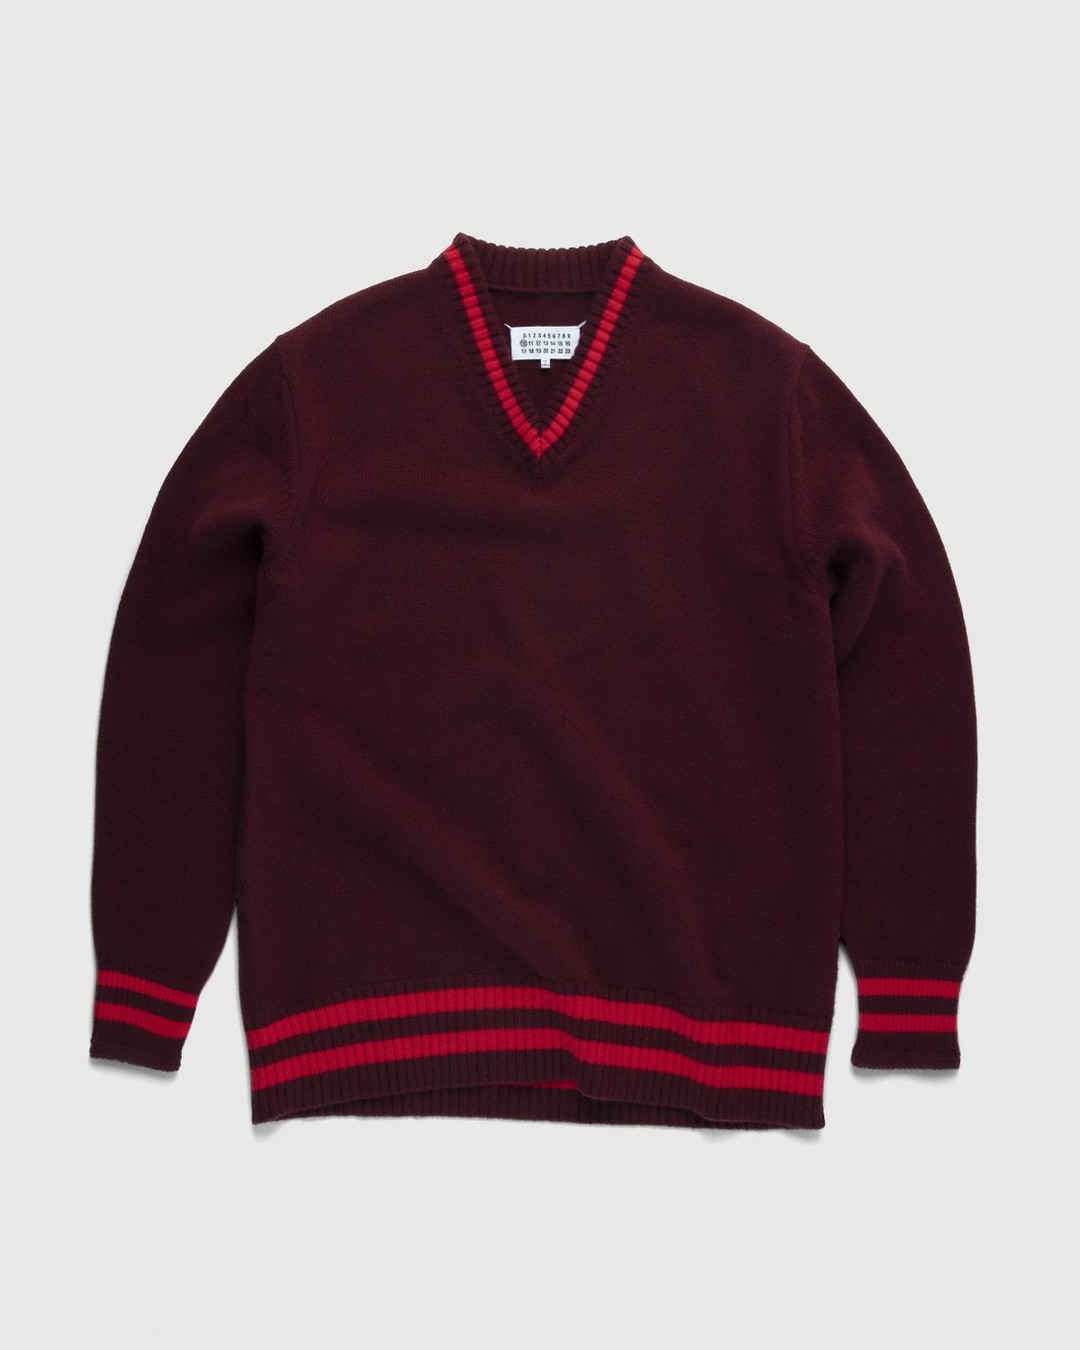 Maison Margiela – Oversized V Neck Knit Burgundy - V-Necks Knitwear - Red - Image 1